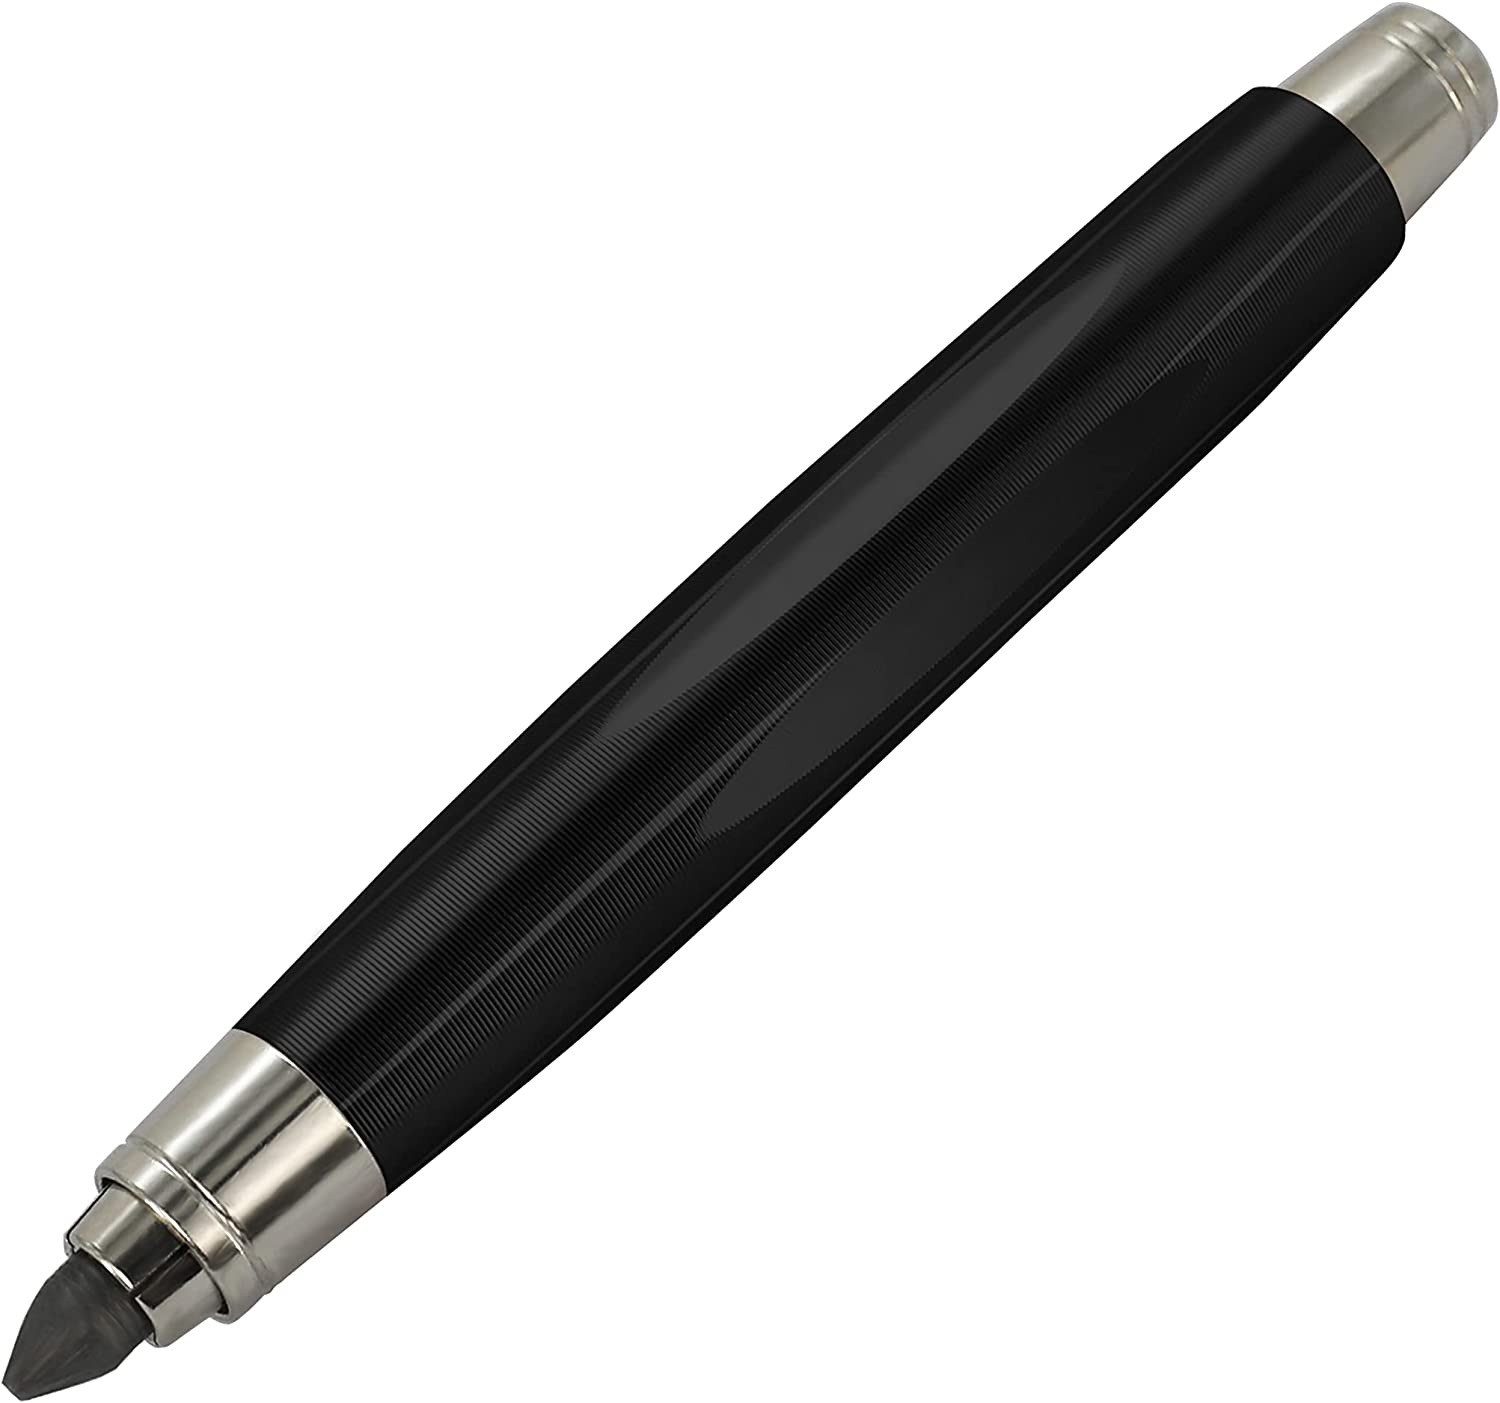 Sketch up 5.6Mm Mechanical Pencil Mechanical Clutch with Built Sharpener (Black)